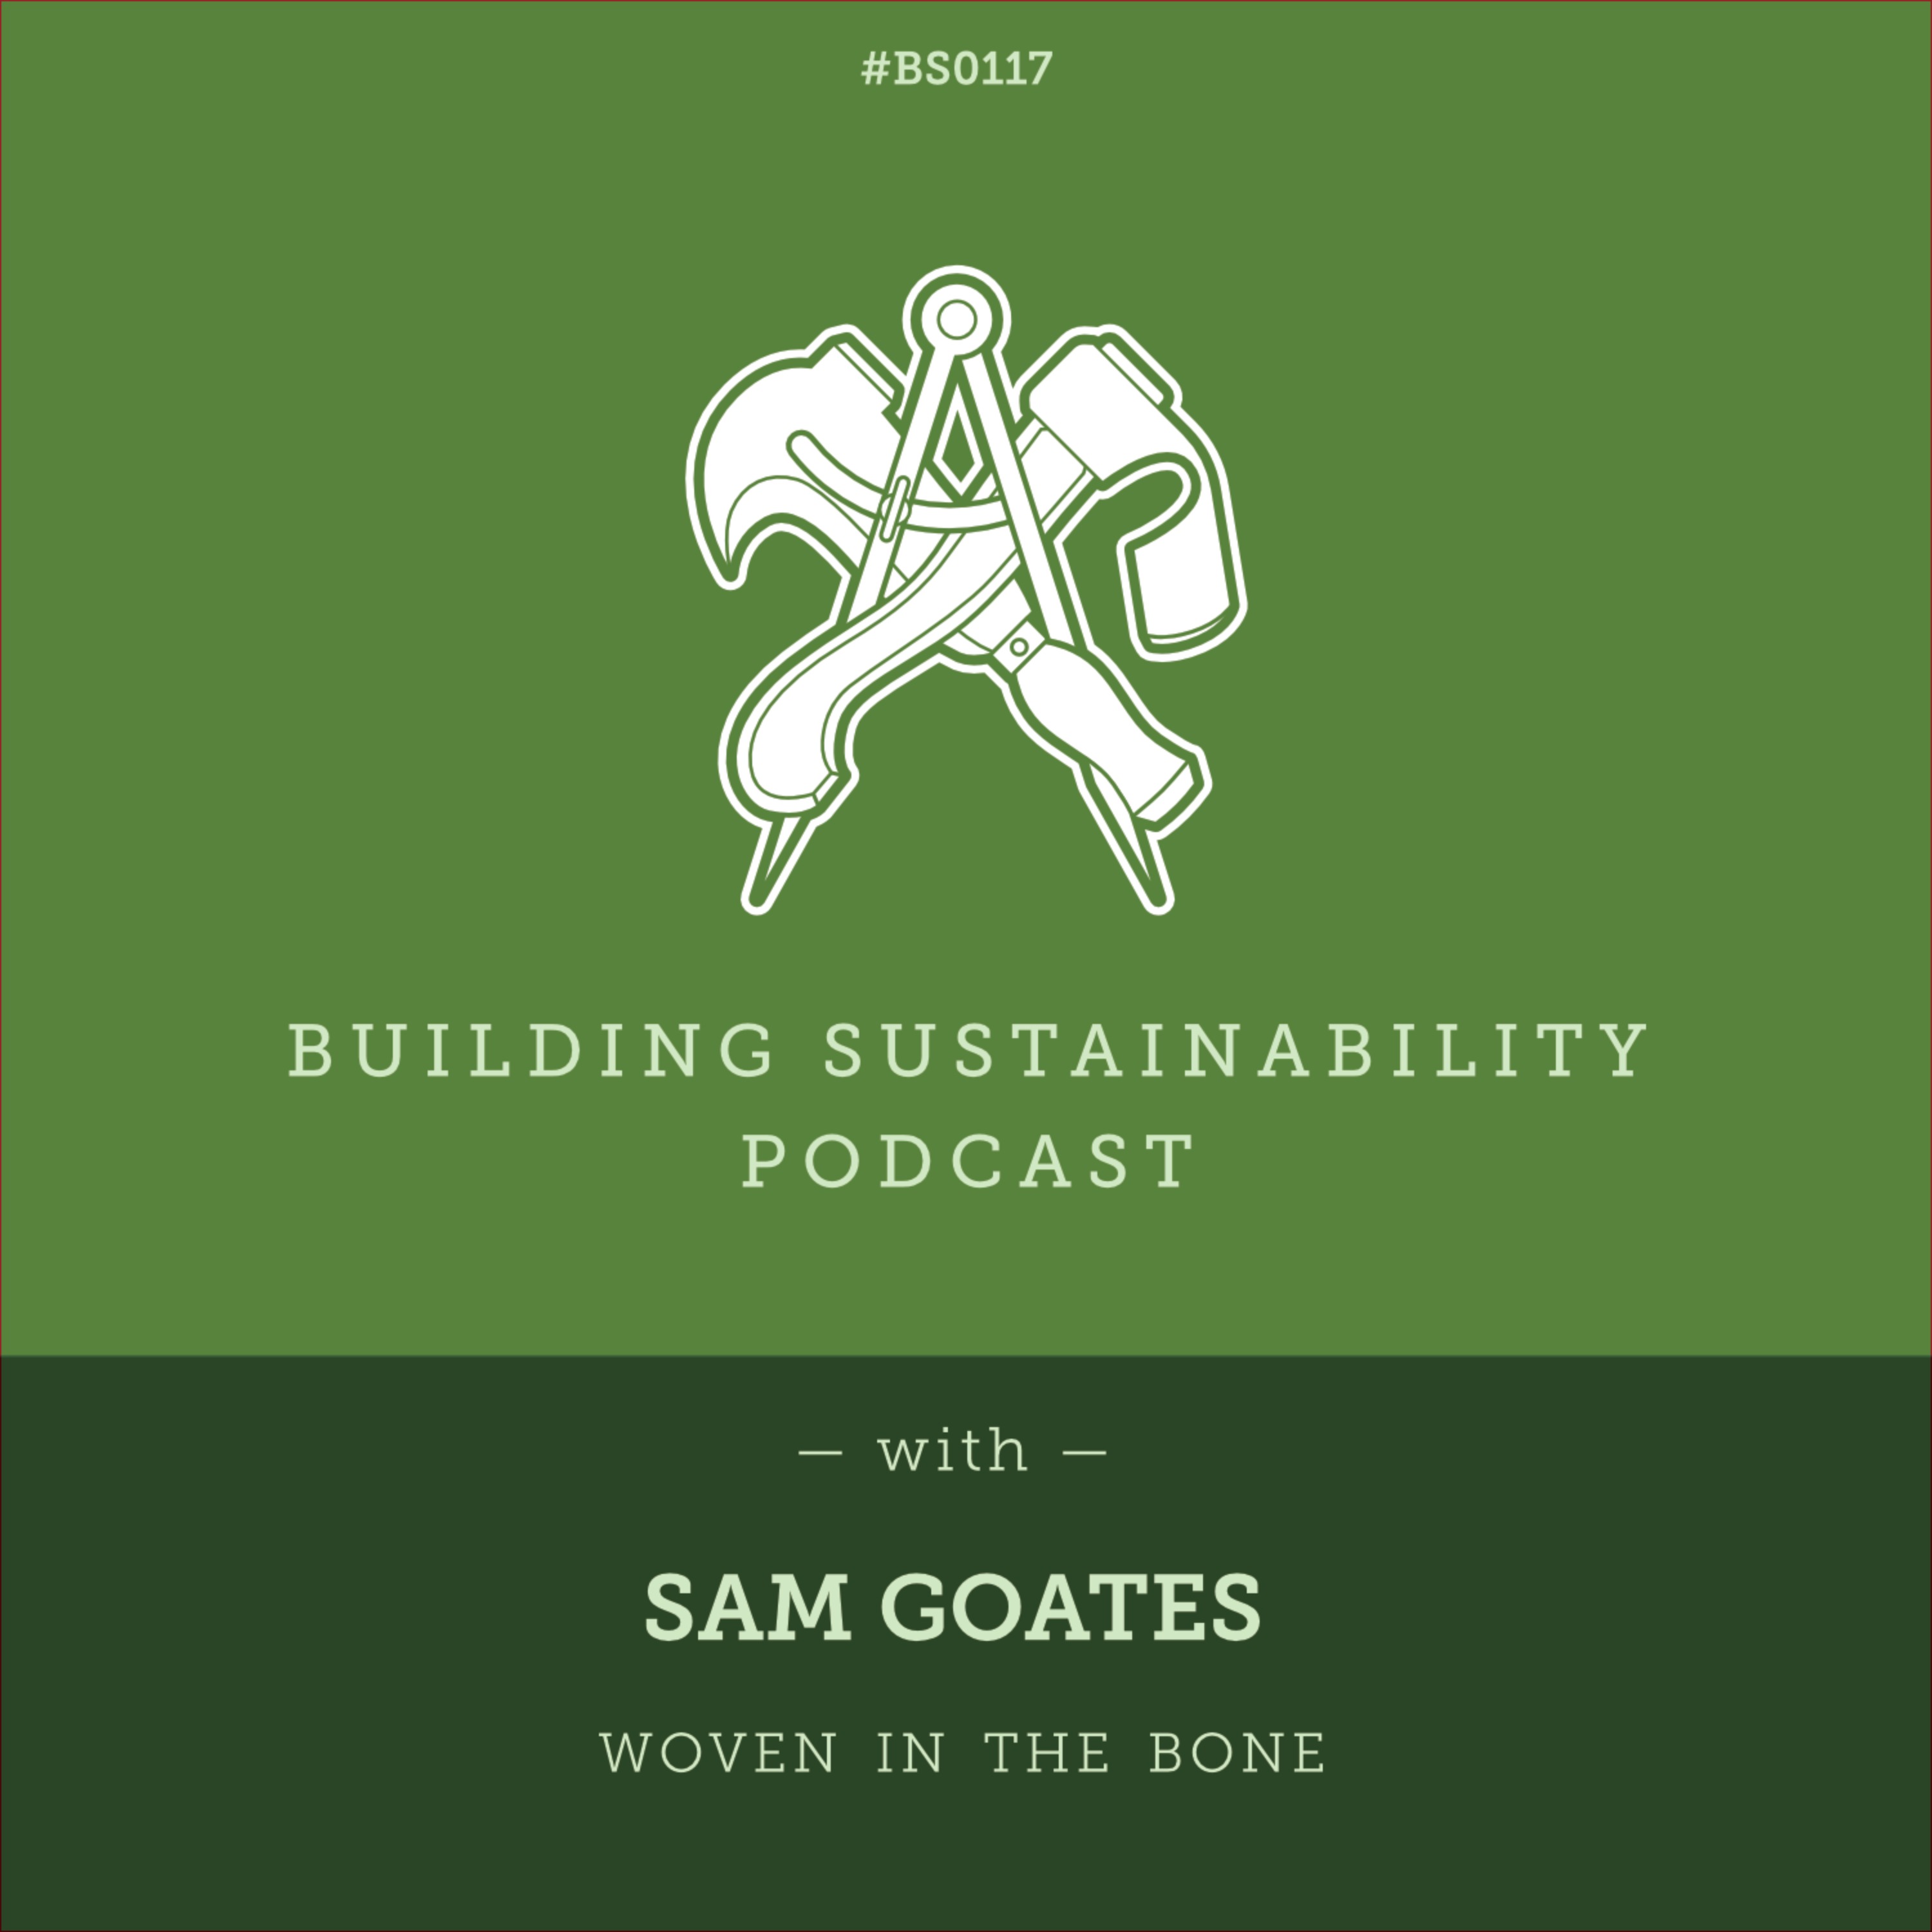 Woven in the bone - Sam Goates - BS117